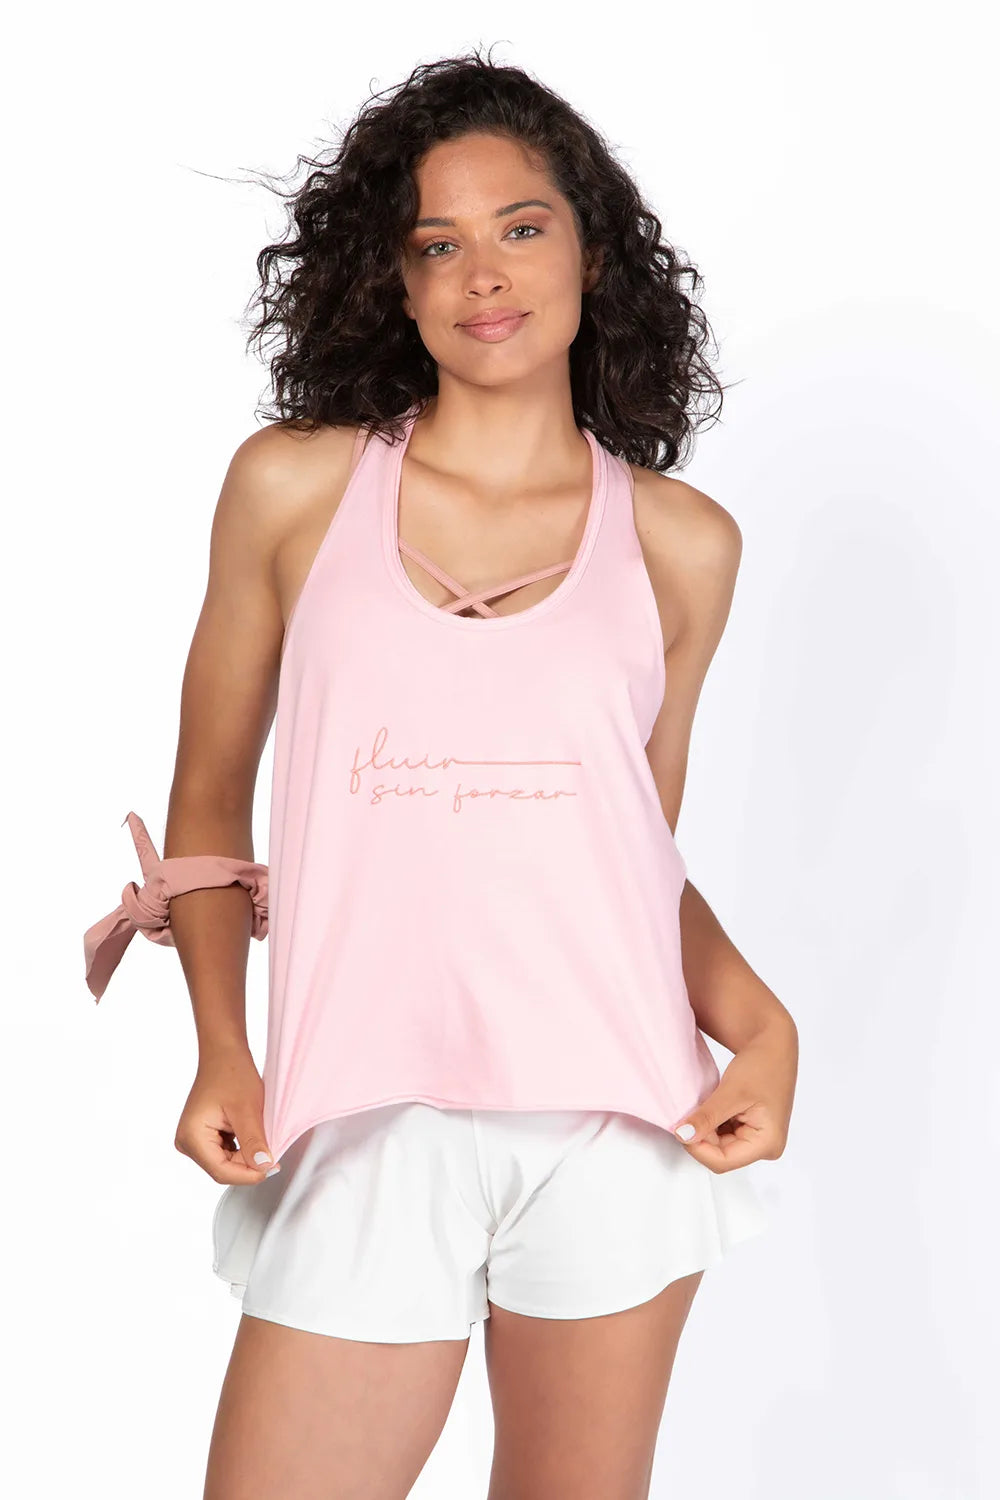 Camiseta Fluir Tank, modelo estilo nadadora en color rosa Rose Shadow de Yogimi. Camiseta tirantes holgada con mantra &quot;Fluir sin forzar&quot;.